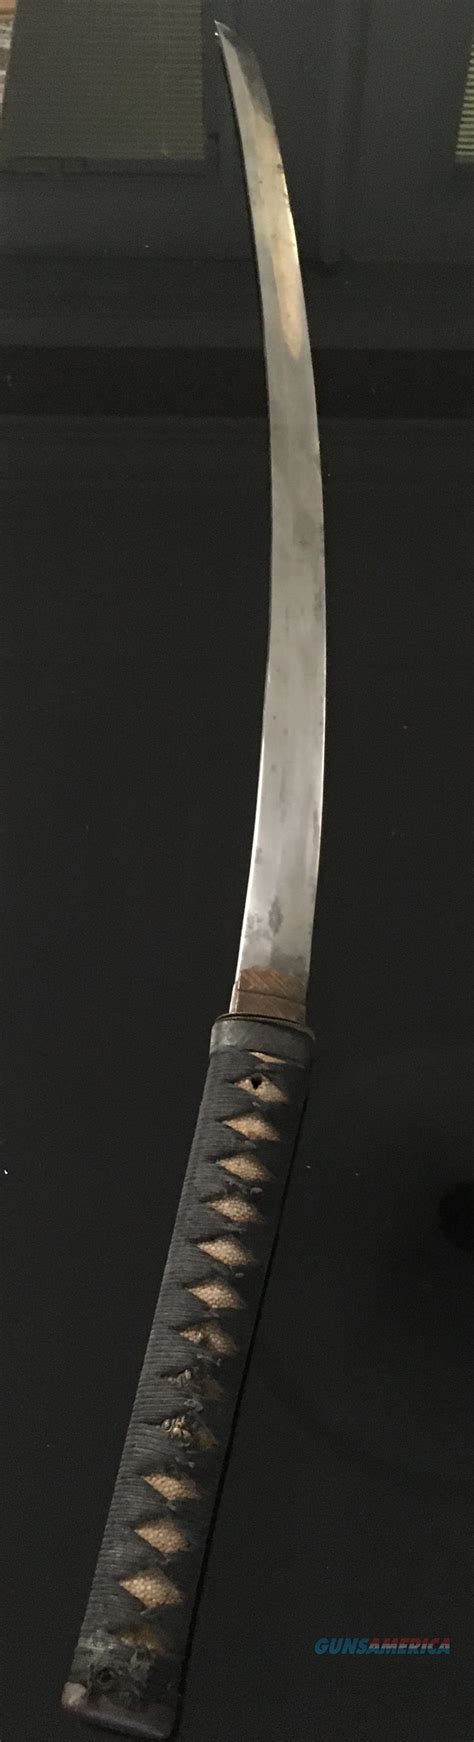 Kantana Sword Original For Sale At 947164584